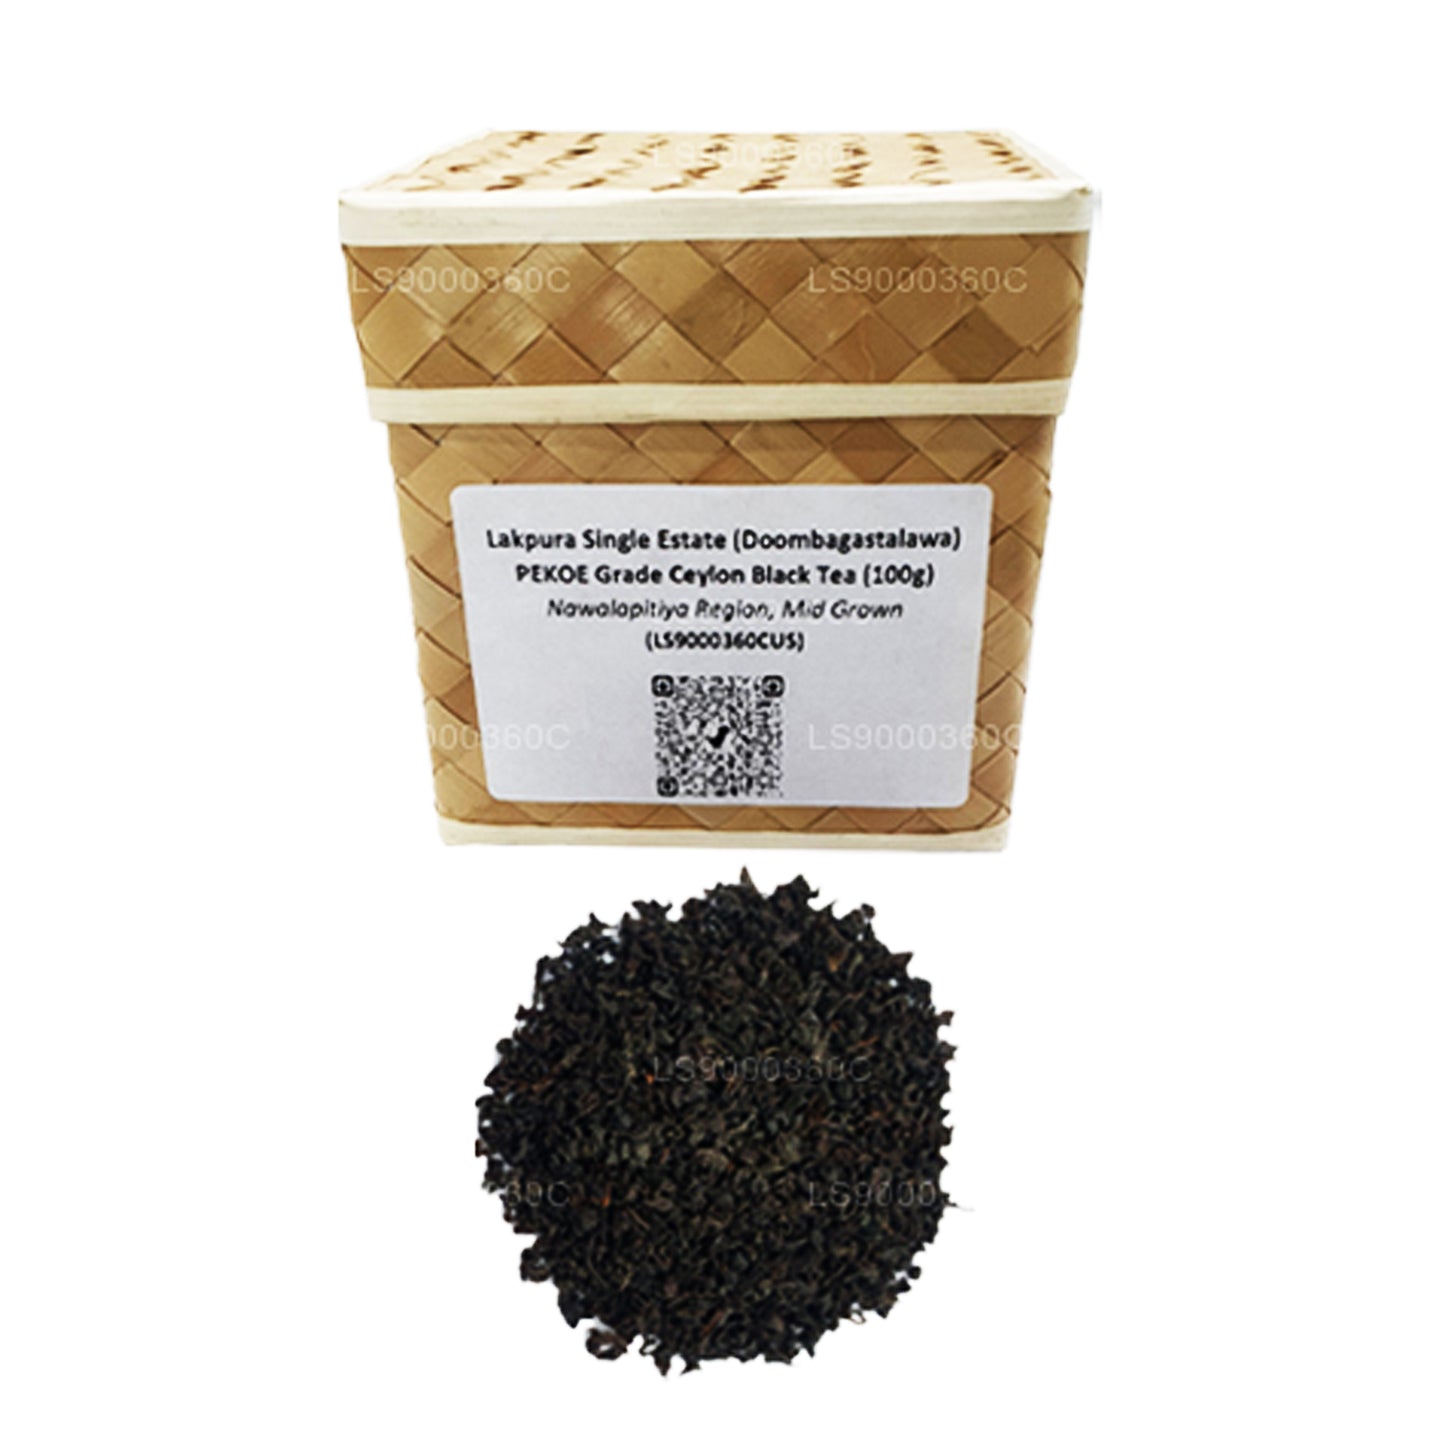 Lakpura Single Estate (Doombagastalawa) PEKOE Grade Ceylon zwarte thee (100 g)